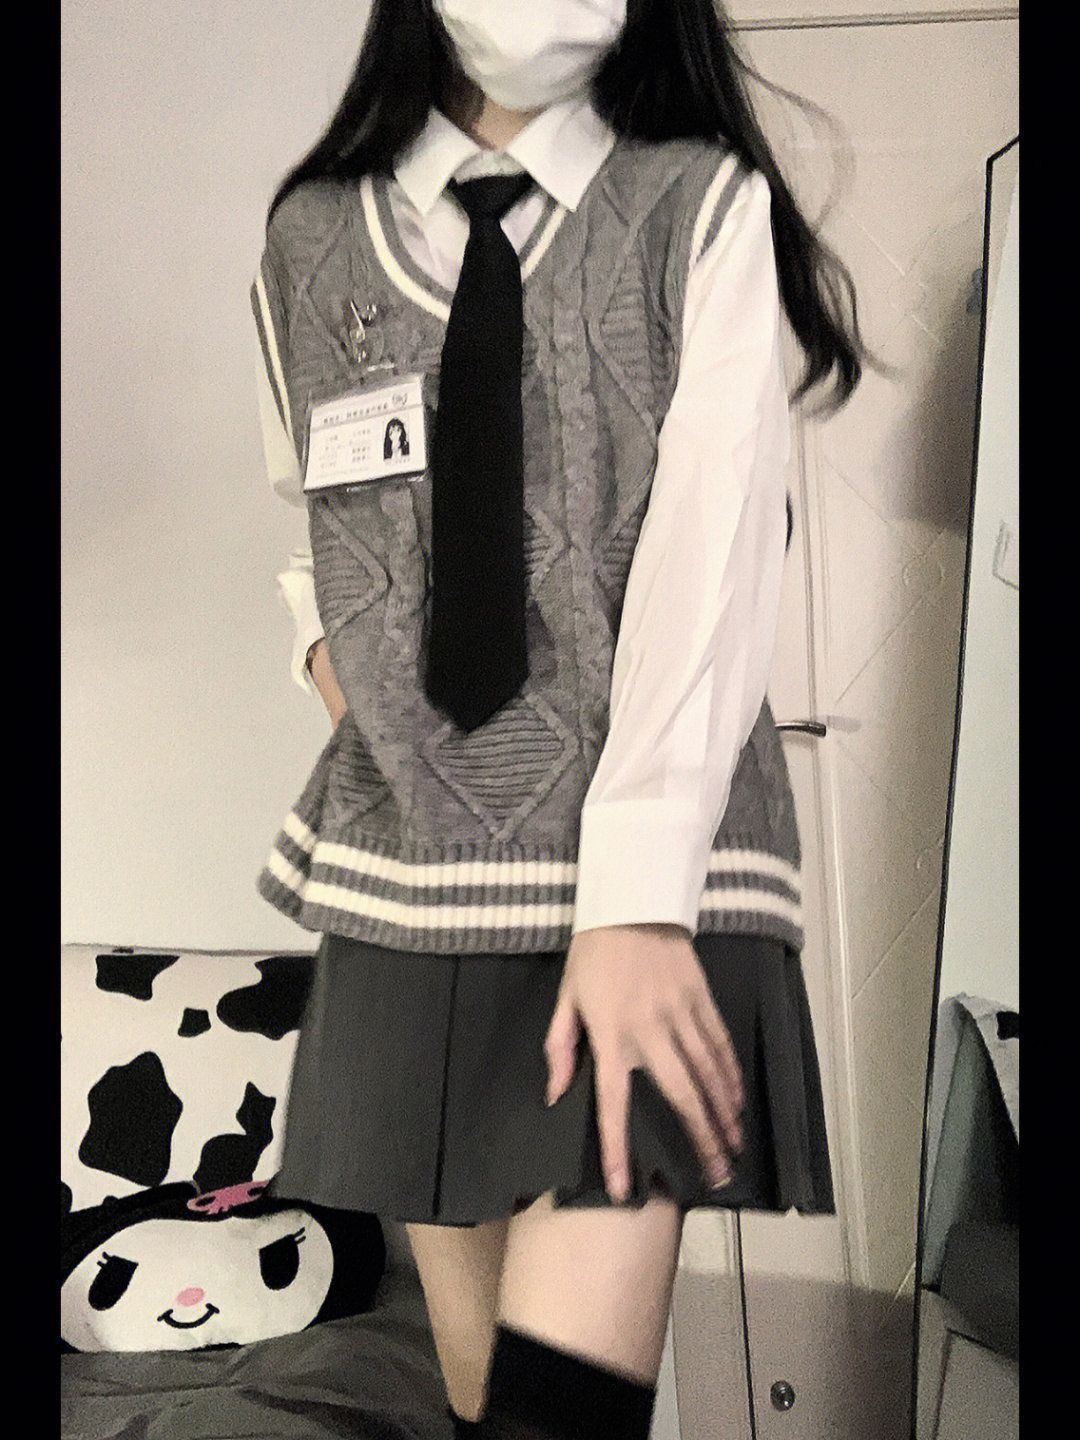 Three-piece suit Japanese college style jk tie shirt + V-neck twist sweater vest vest female slim skirt